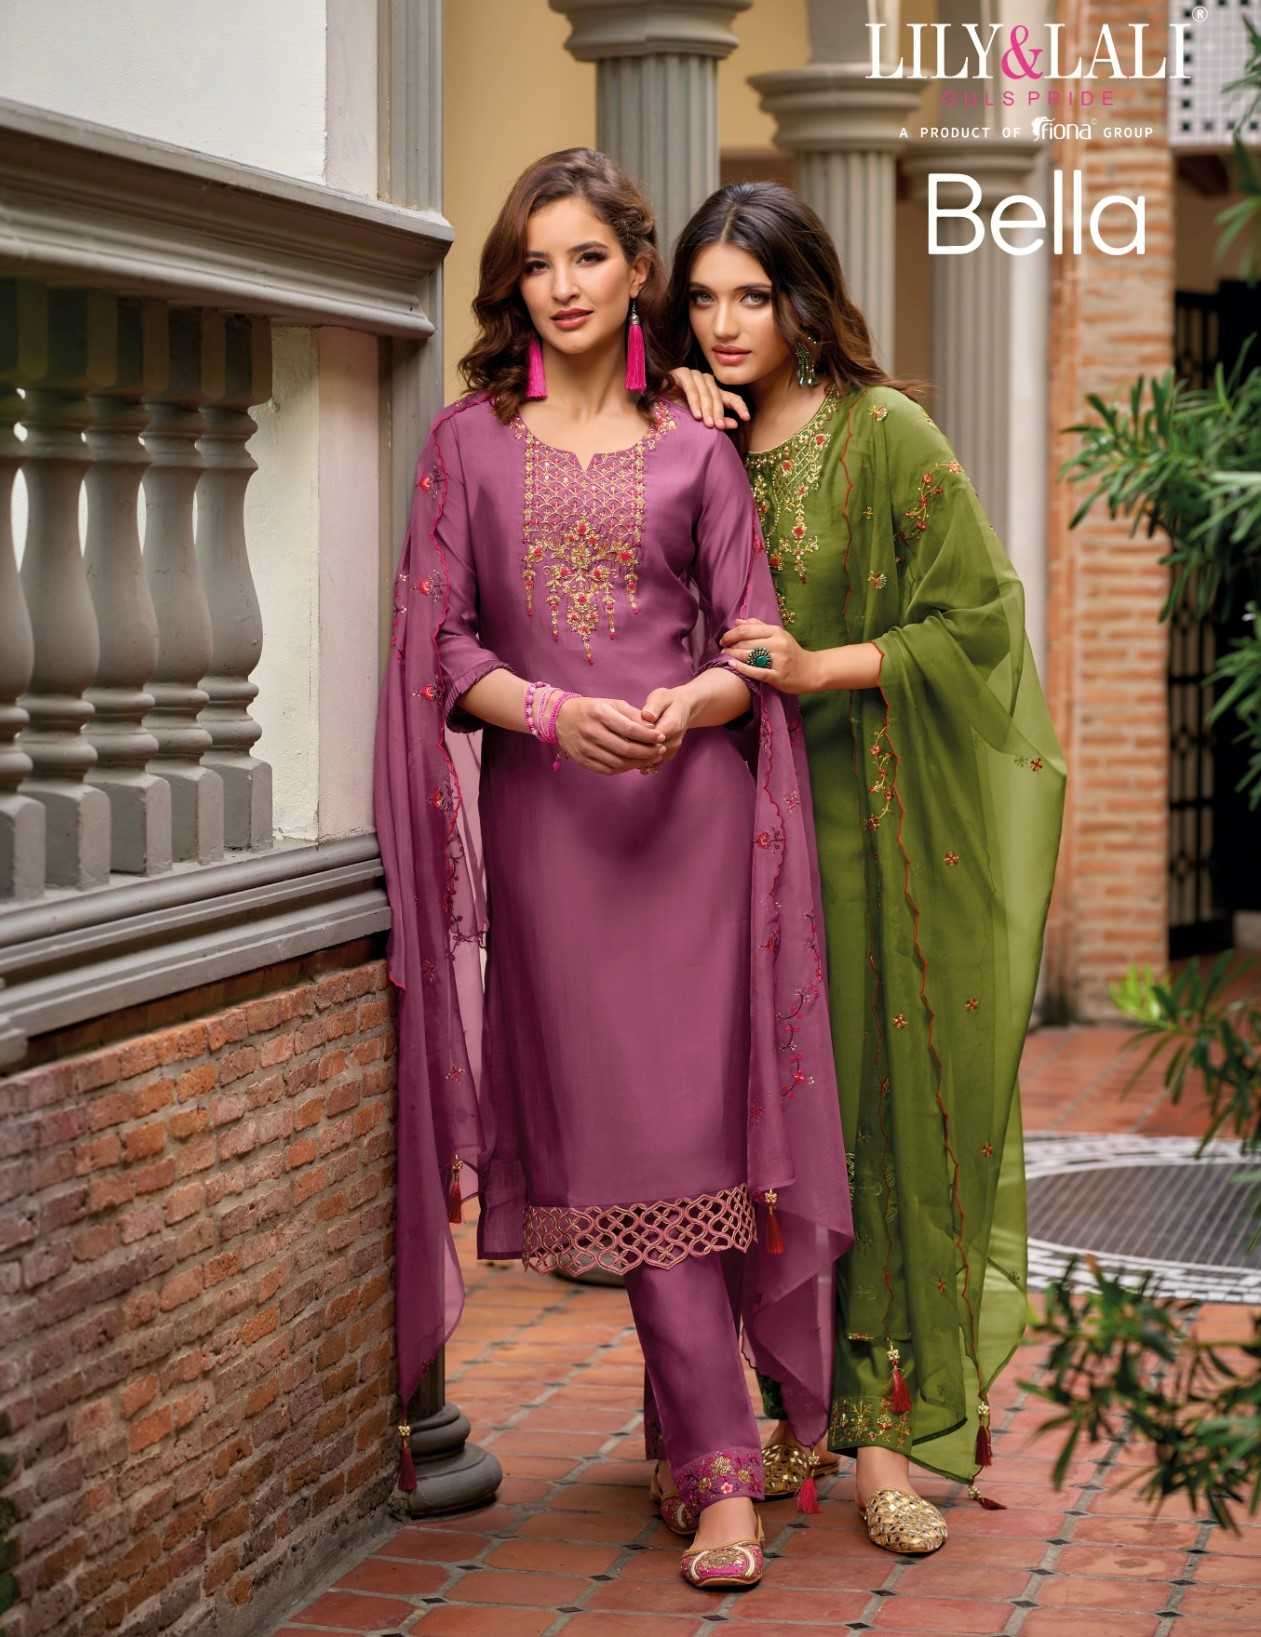 lily and lali bella series 14001-14006 milan silk handwork suit 